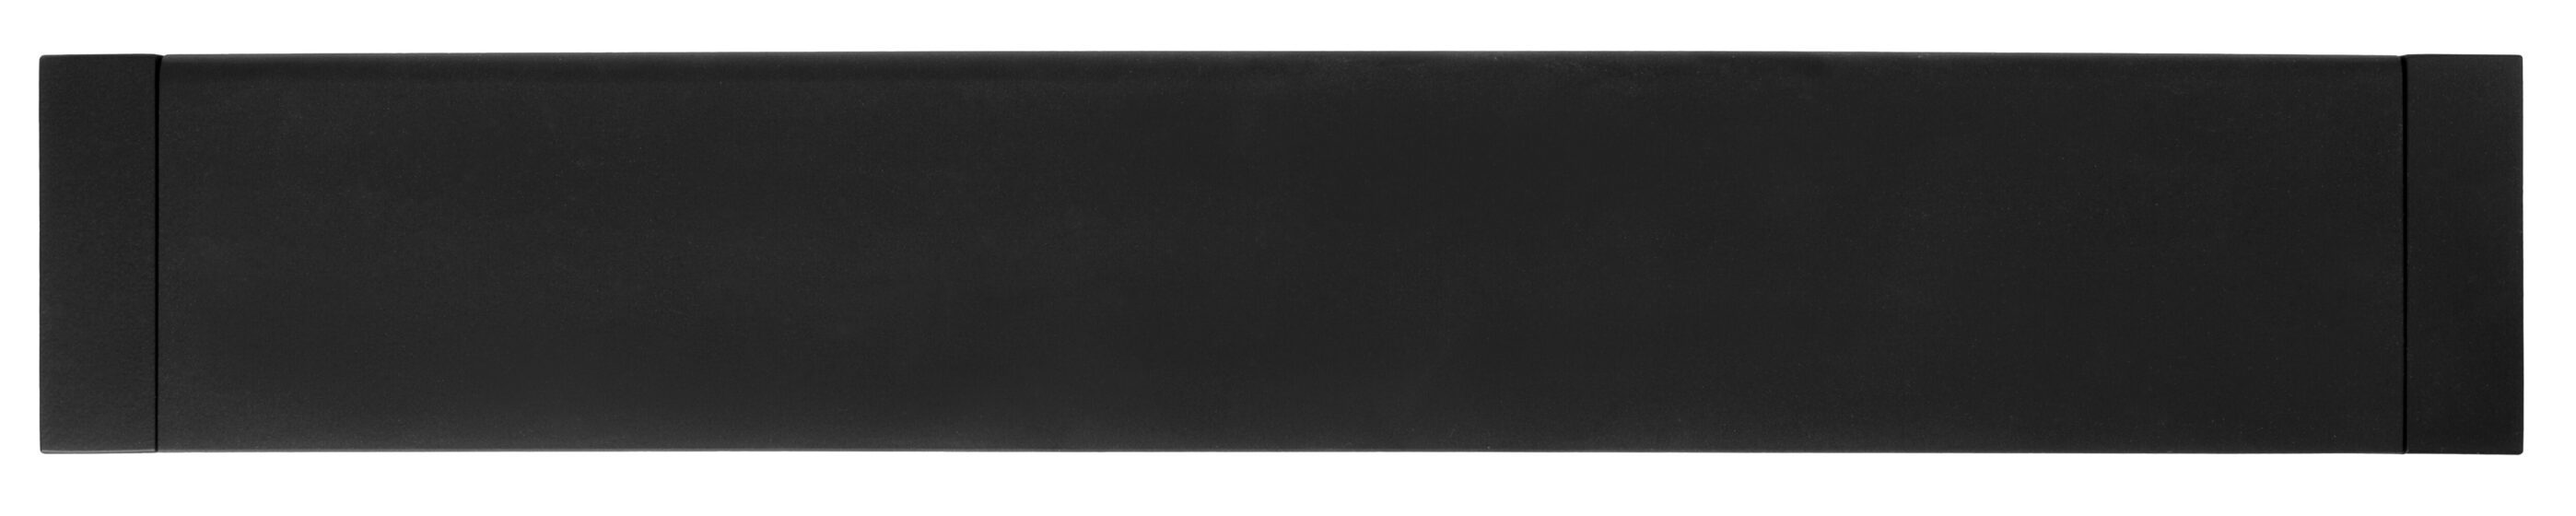 SQUARE LSQ380BI massieve binnenbriefplaat mat zwart